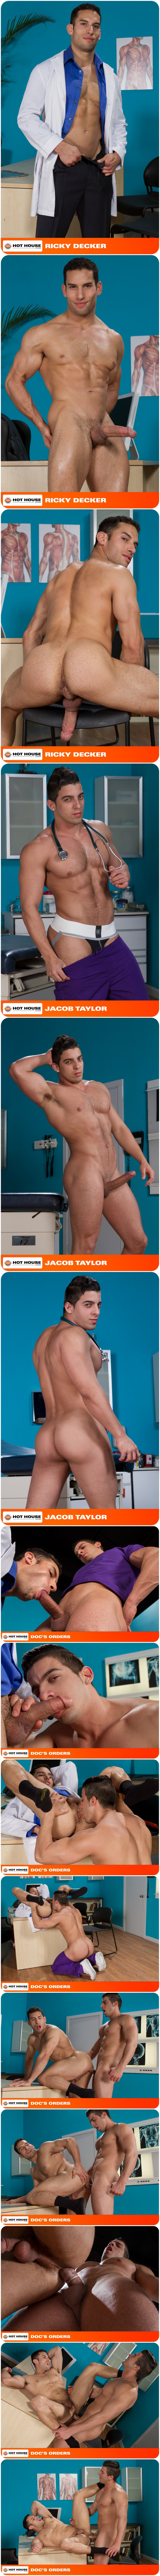 Jacob Taylor, Ricky Decker, Hot House